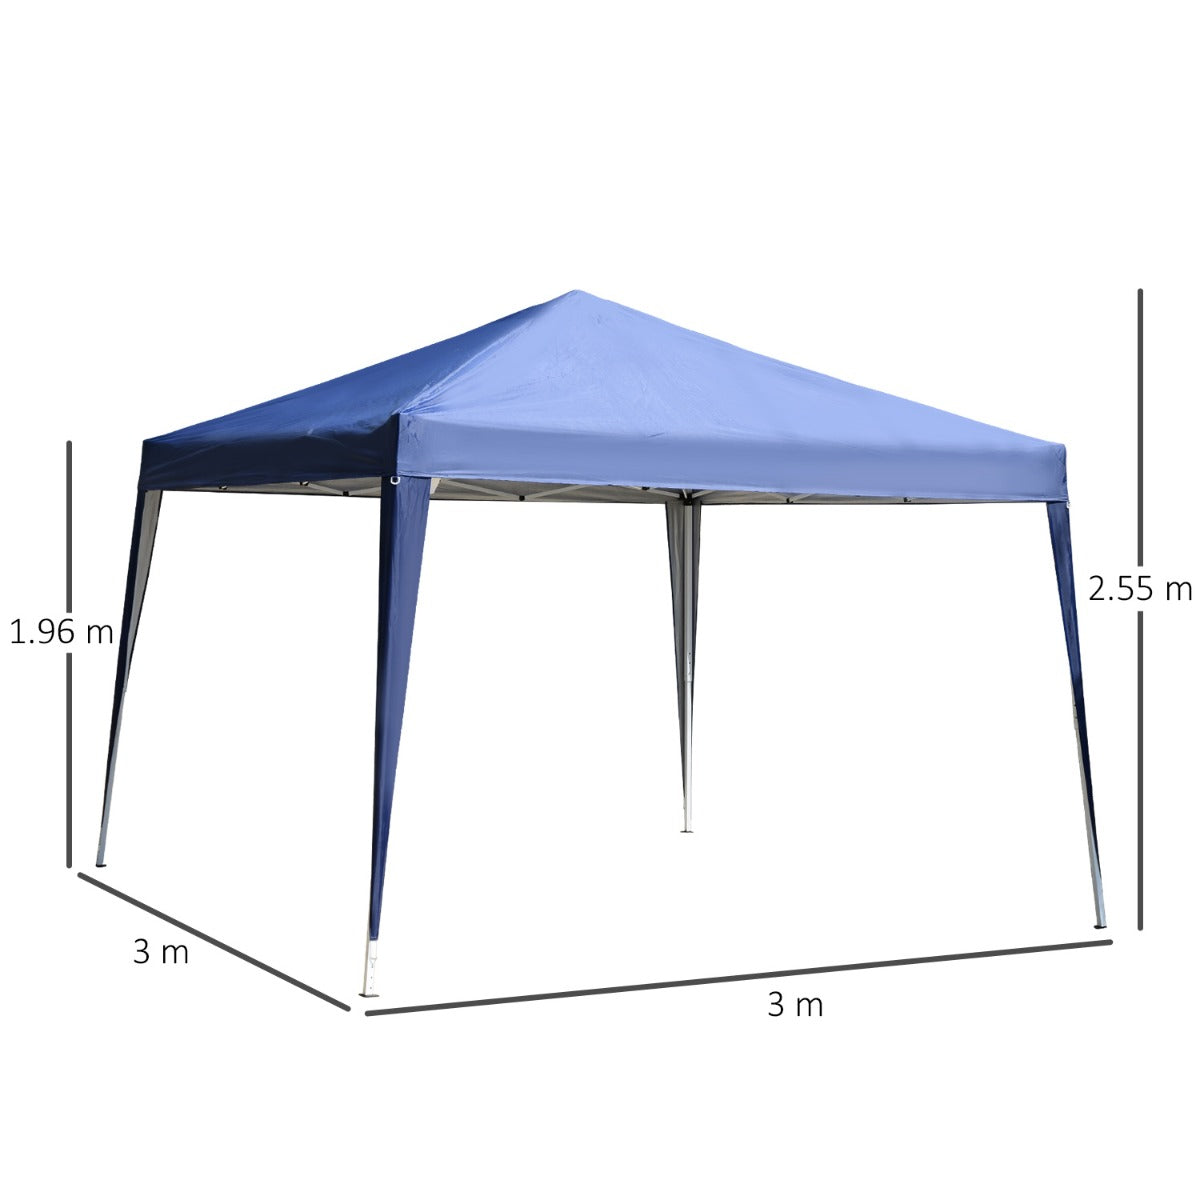 Outsunny 3 x 3 meter Garden Heavy Duty Pop Up Gazebo Marquee Party Tent Folding Wedding Canopy-Blue